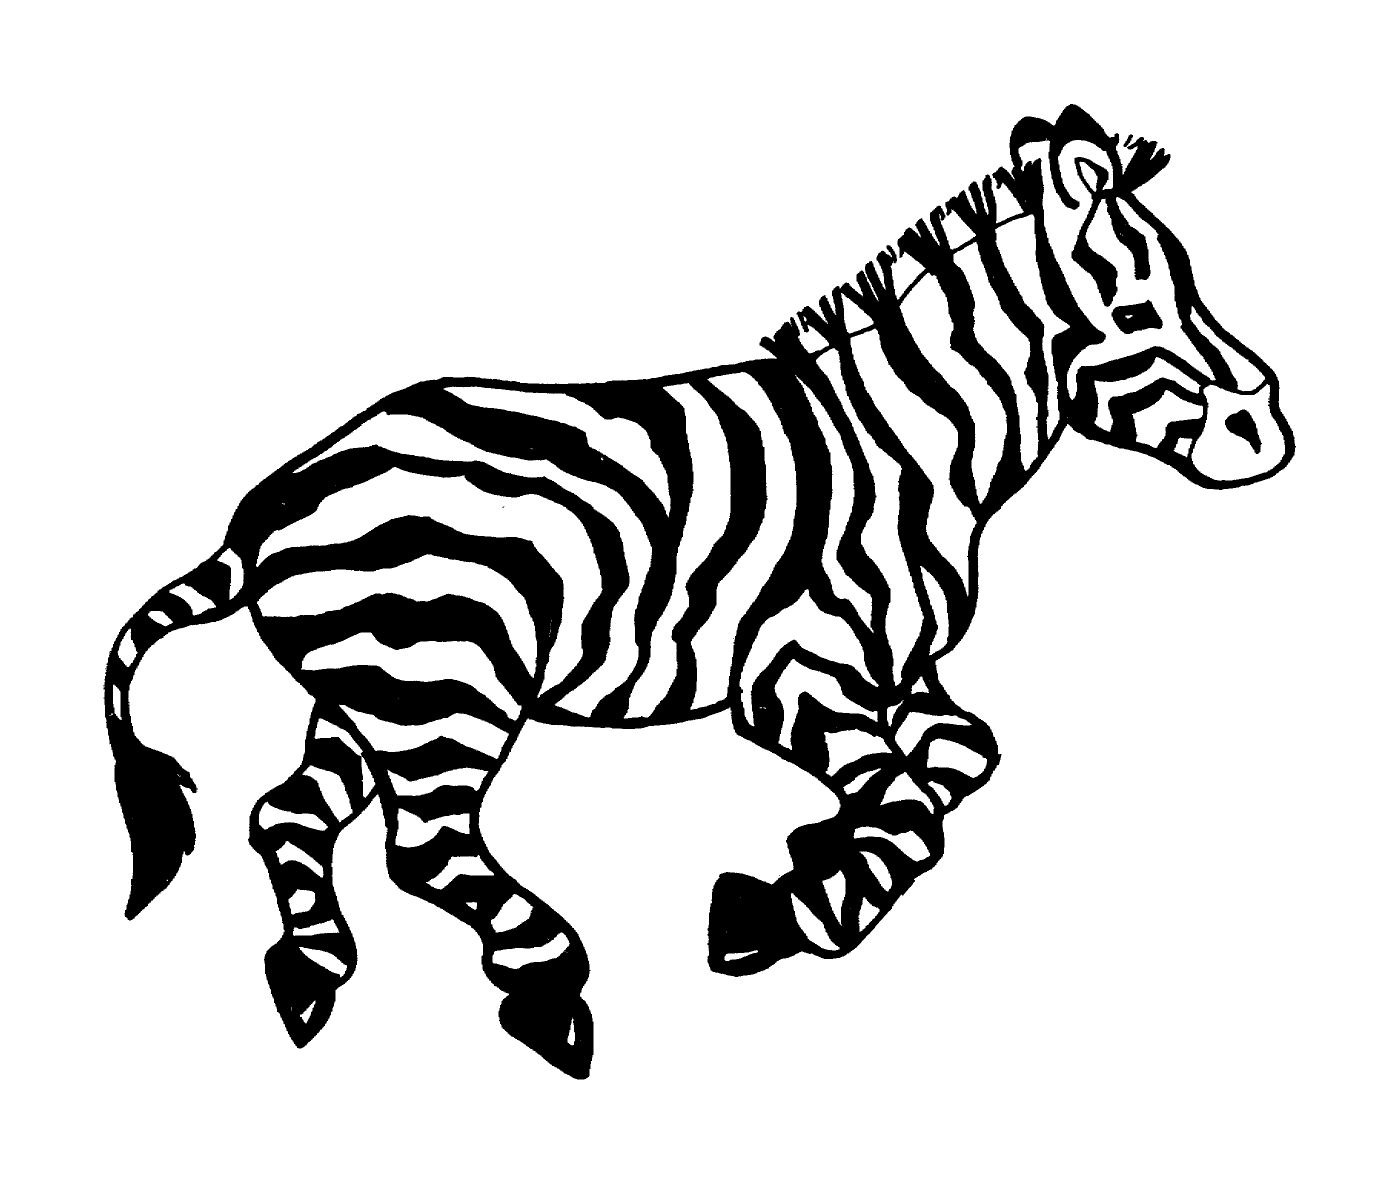  Zebra elegante e maestoso 